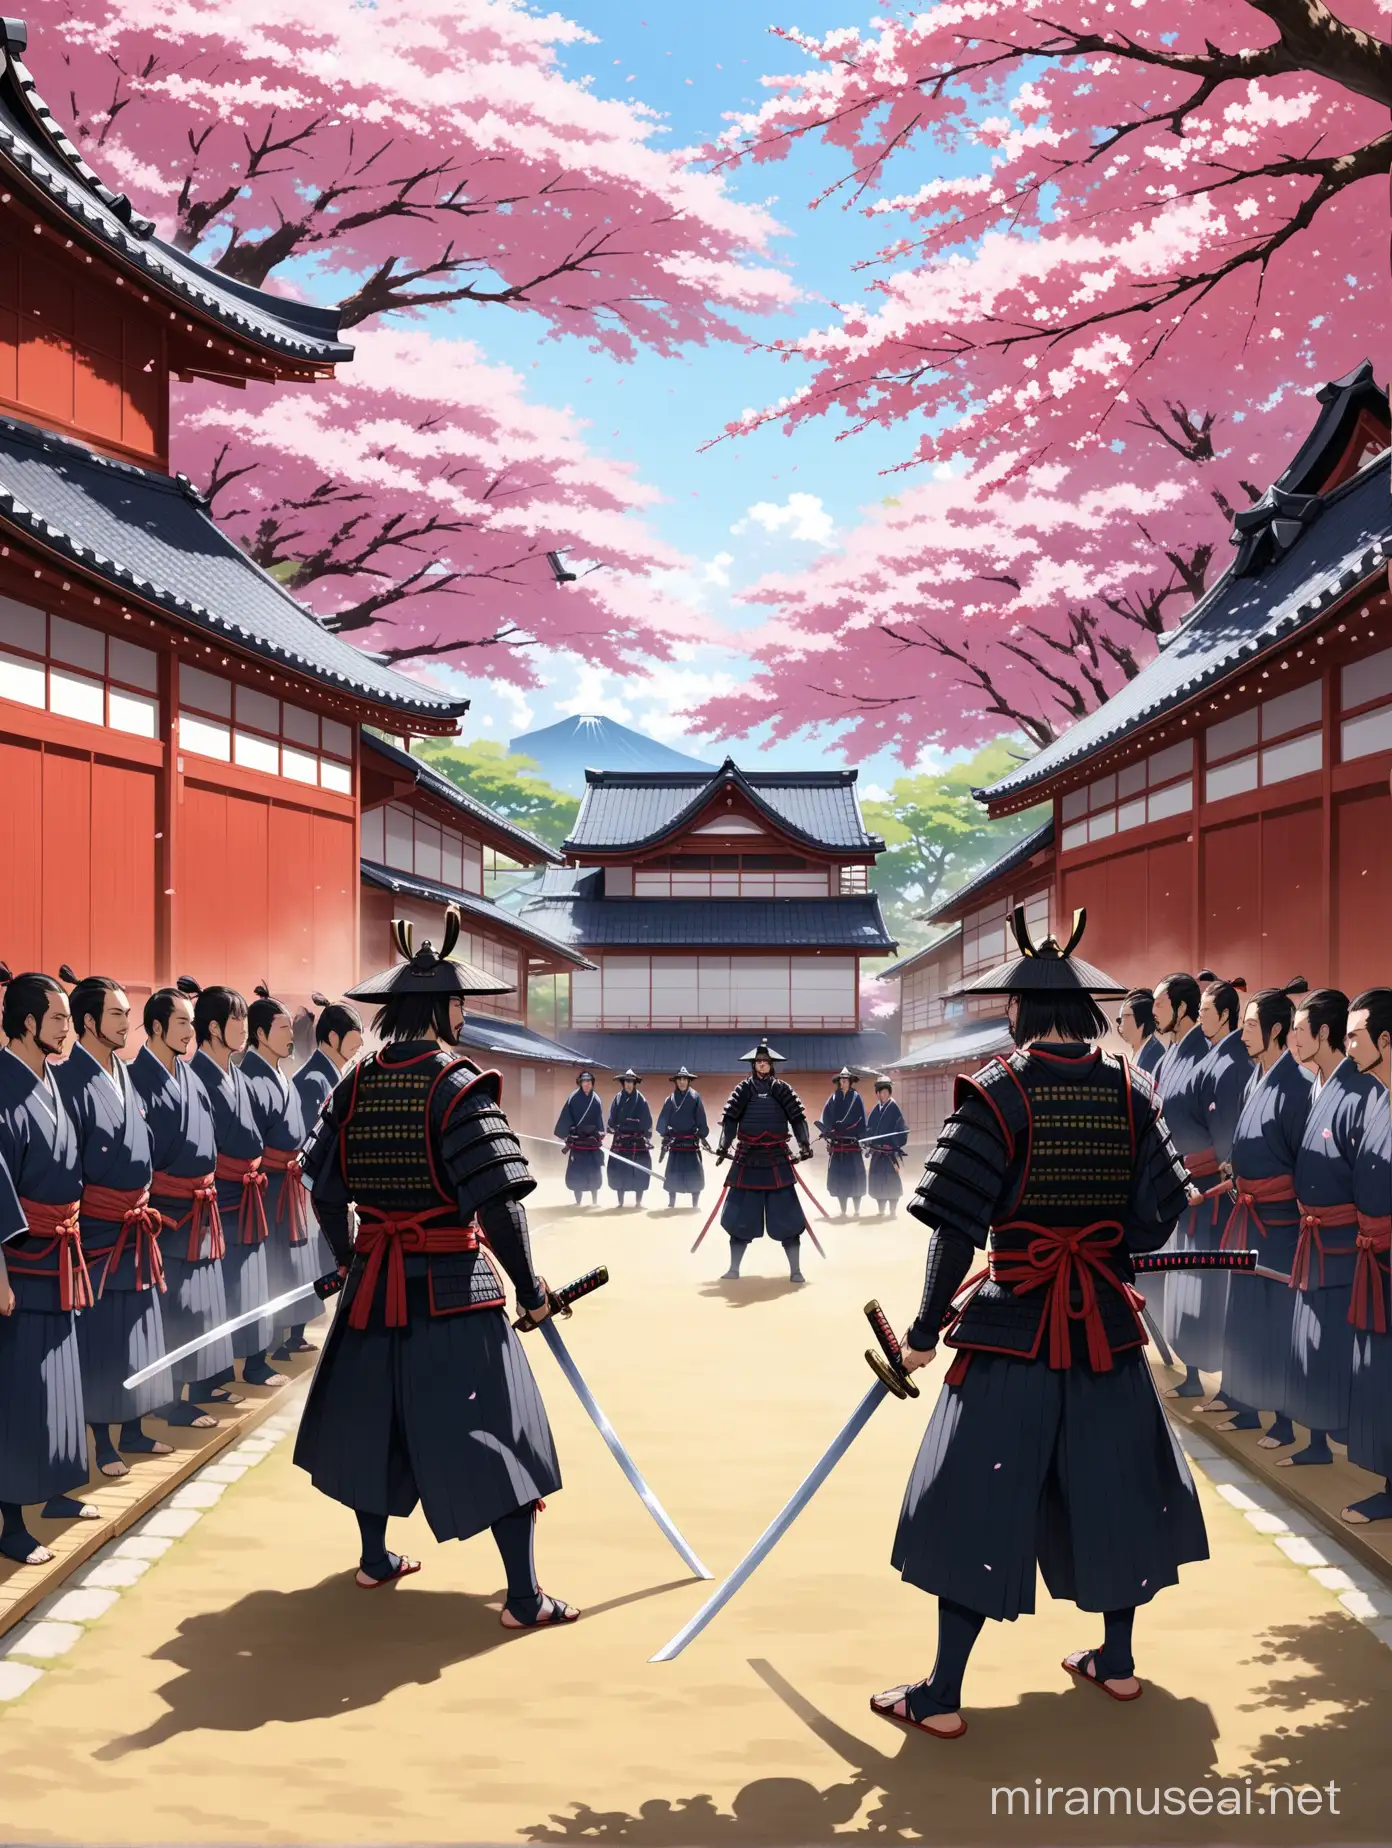 Muromachi Period Samurai Duel with Spectators and Cherry Blossom Tree